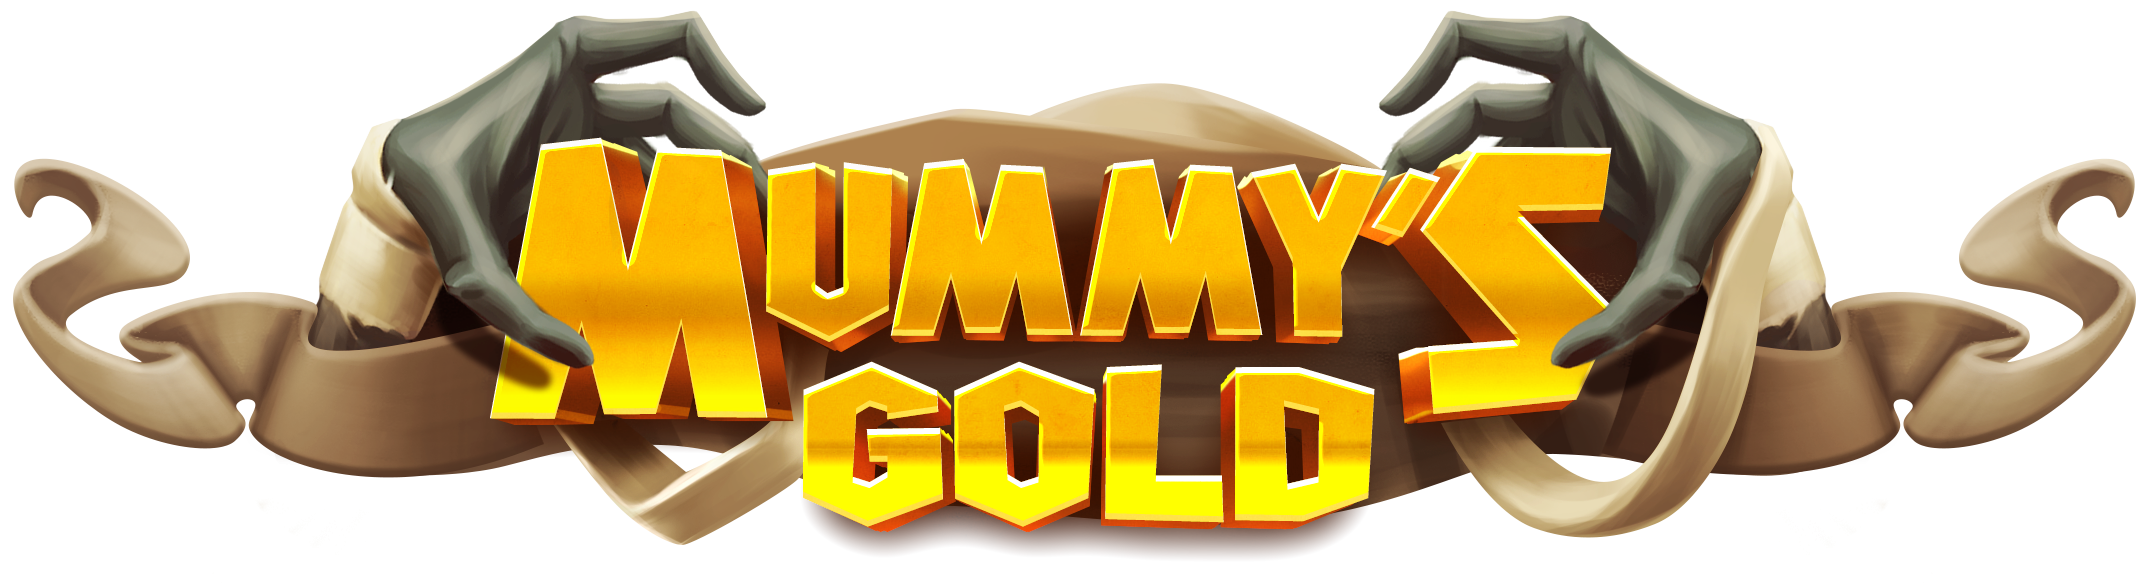 Mummys Gold Slot Logo